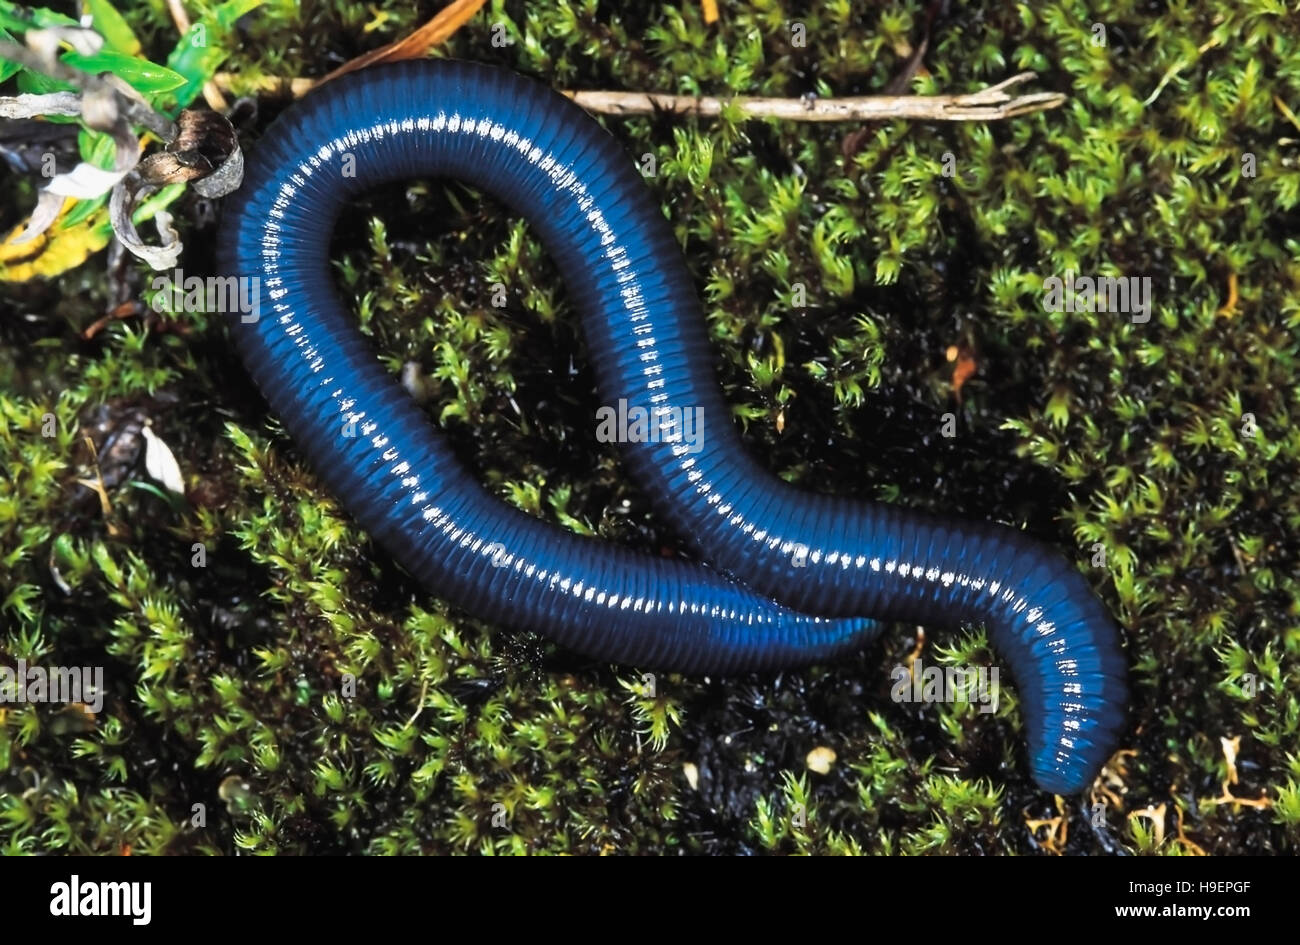 Pha-Mu-Ree. Earthworm photographed at 10, 000 ft. Arunachal Pradesh, India. Stock Photo